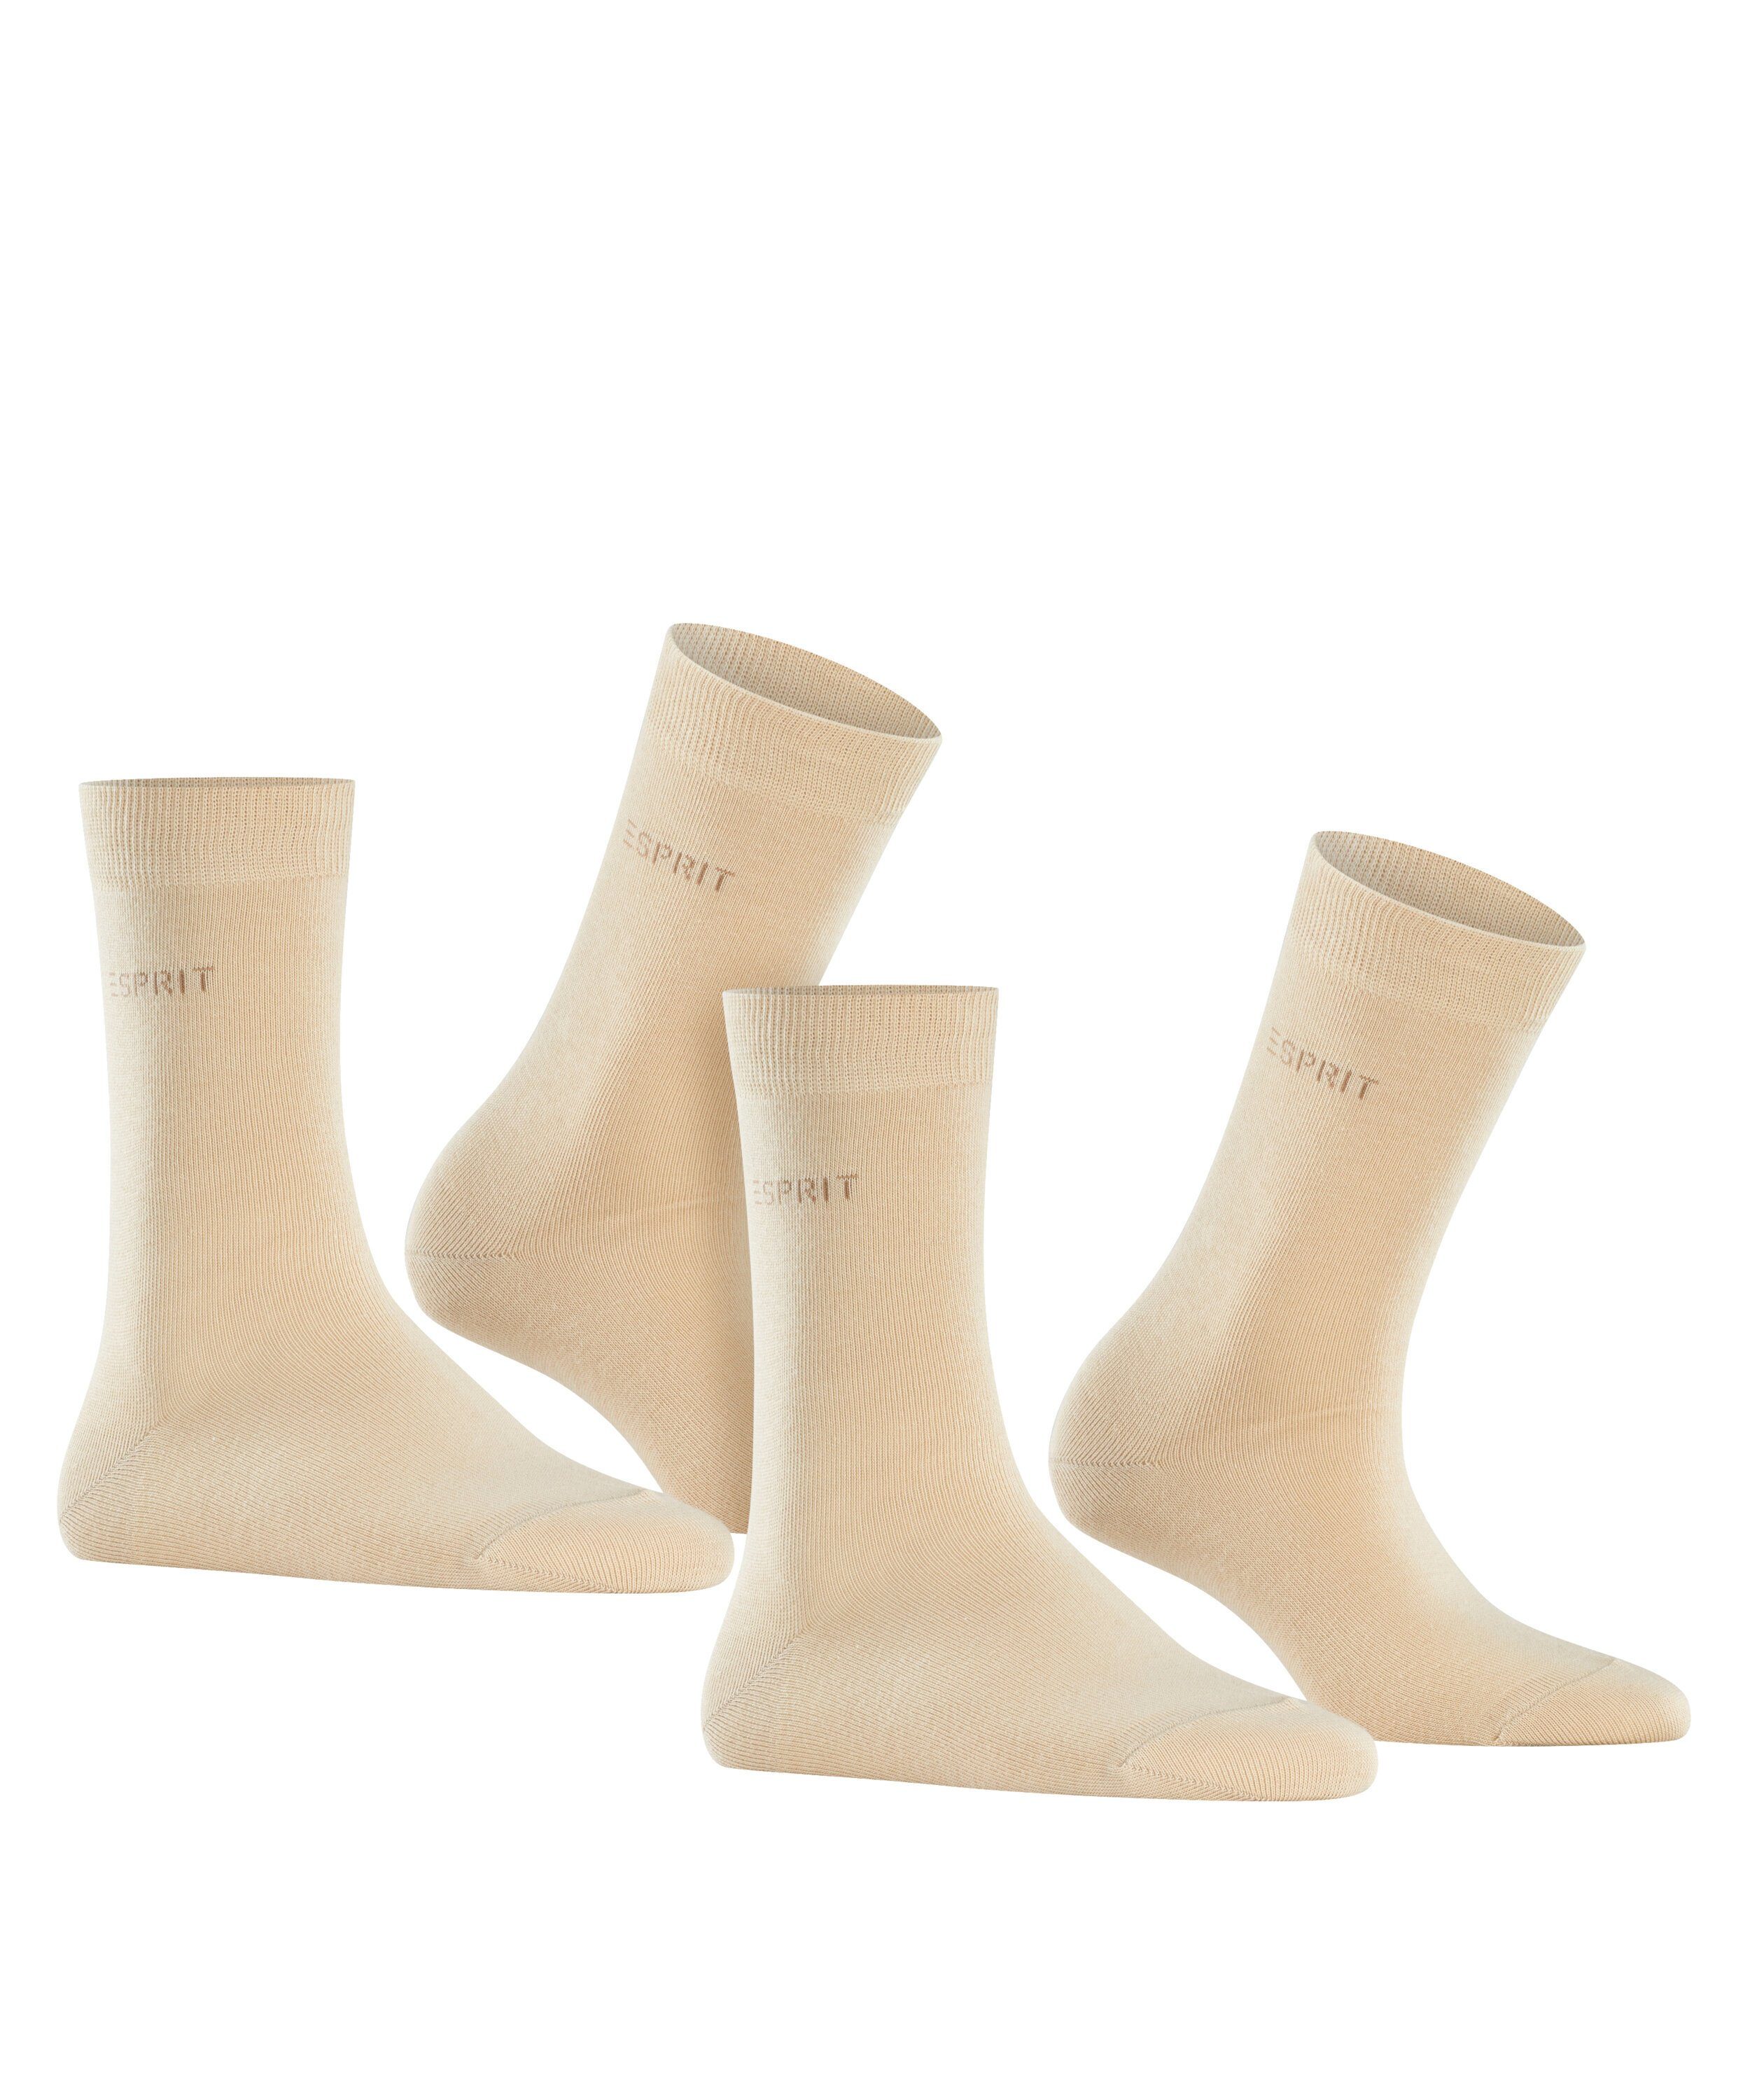 Uni (2-Paar) cream Socken (4011) Esprit 2-Pack